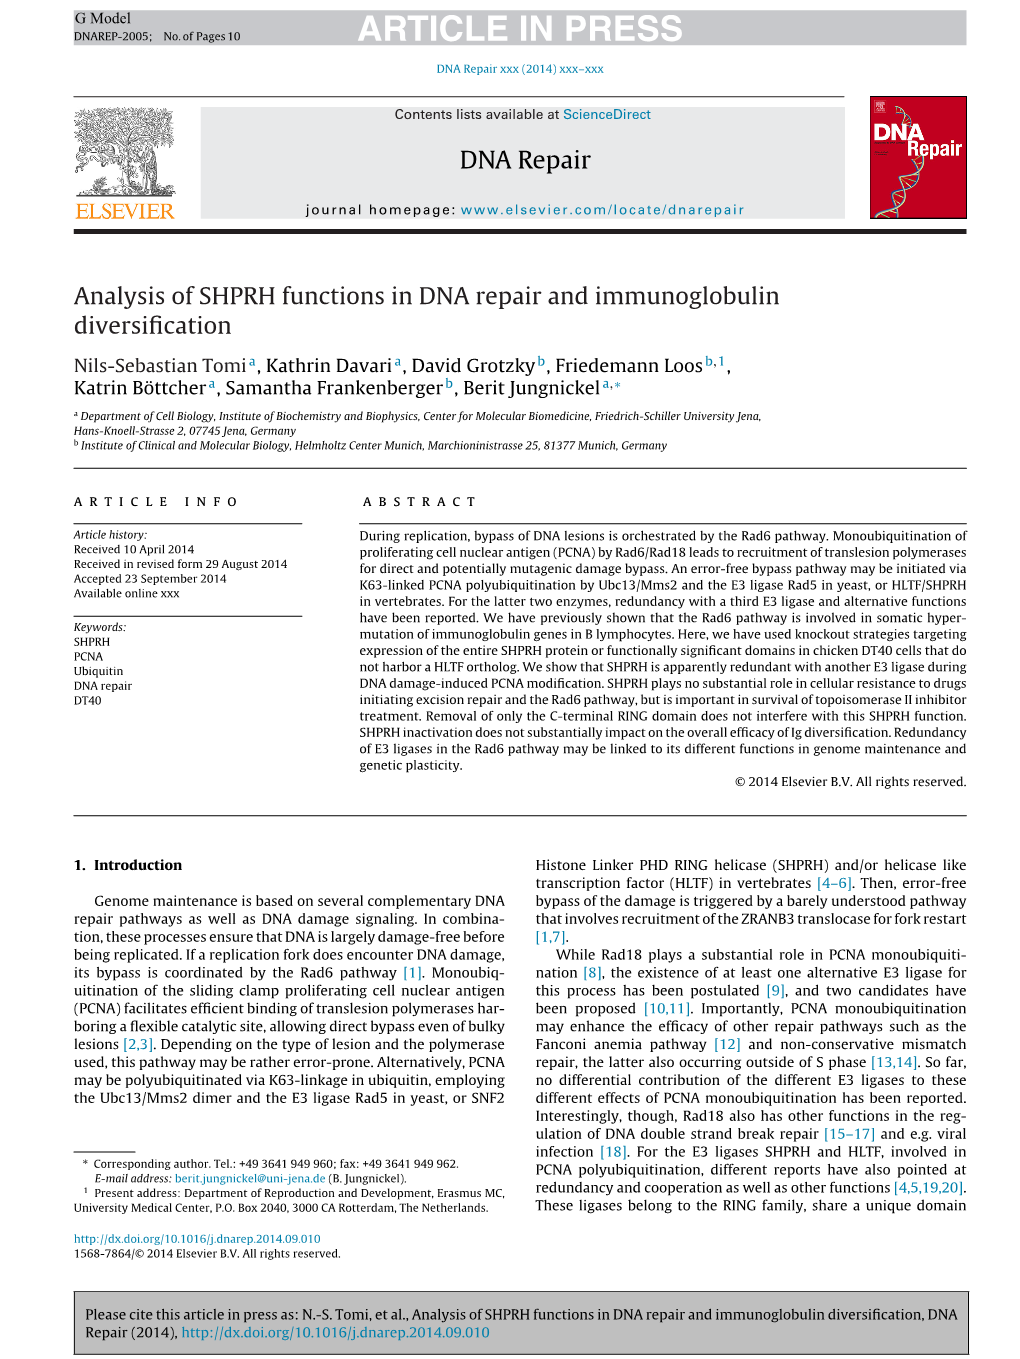 Analysis of SHPRH Functions in DNA Repair and Immunoglobulin Diversiﬁcation